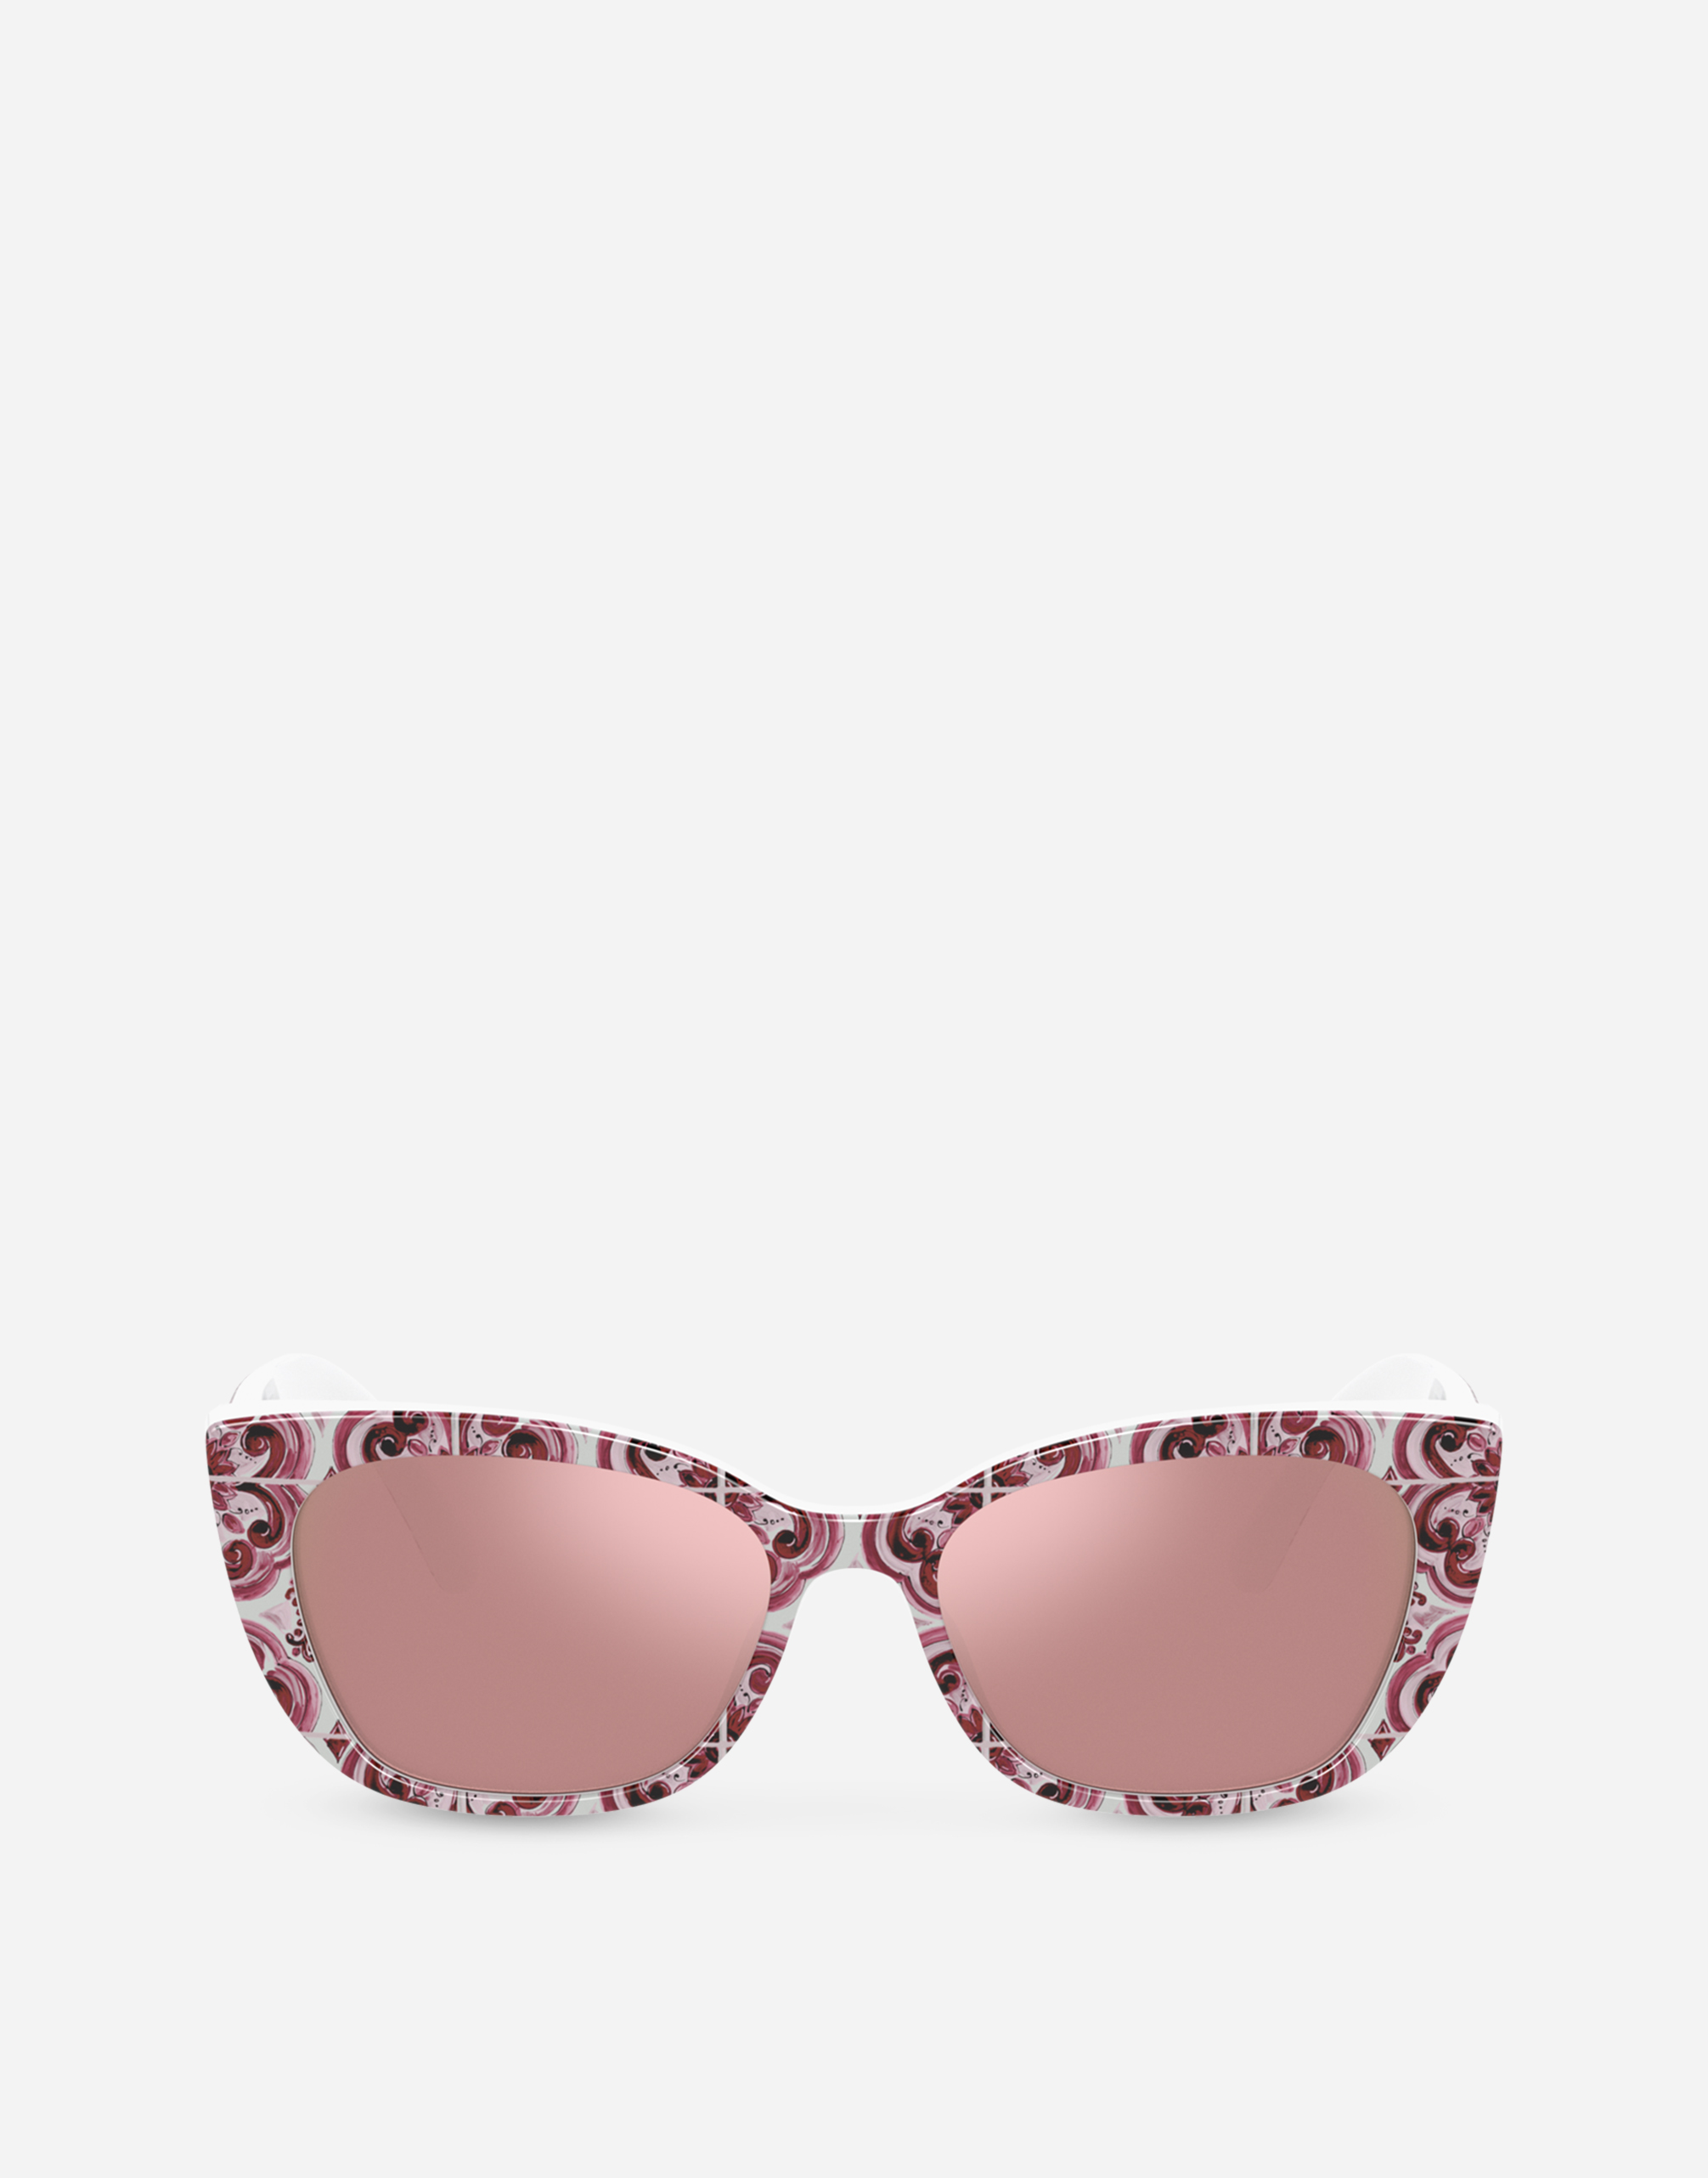 Dolce & Gabbana Kids' Maiolica Fucsia Sunglasses